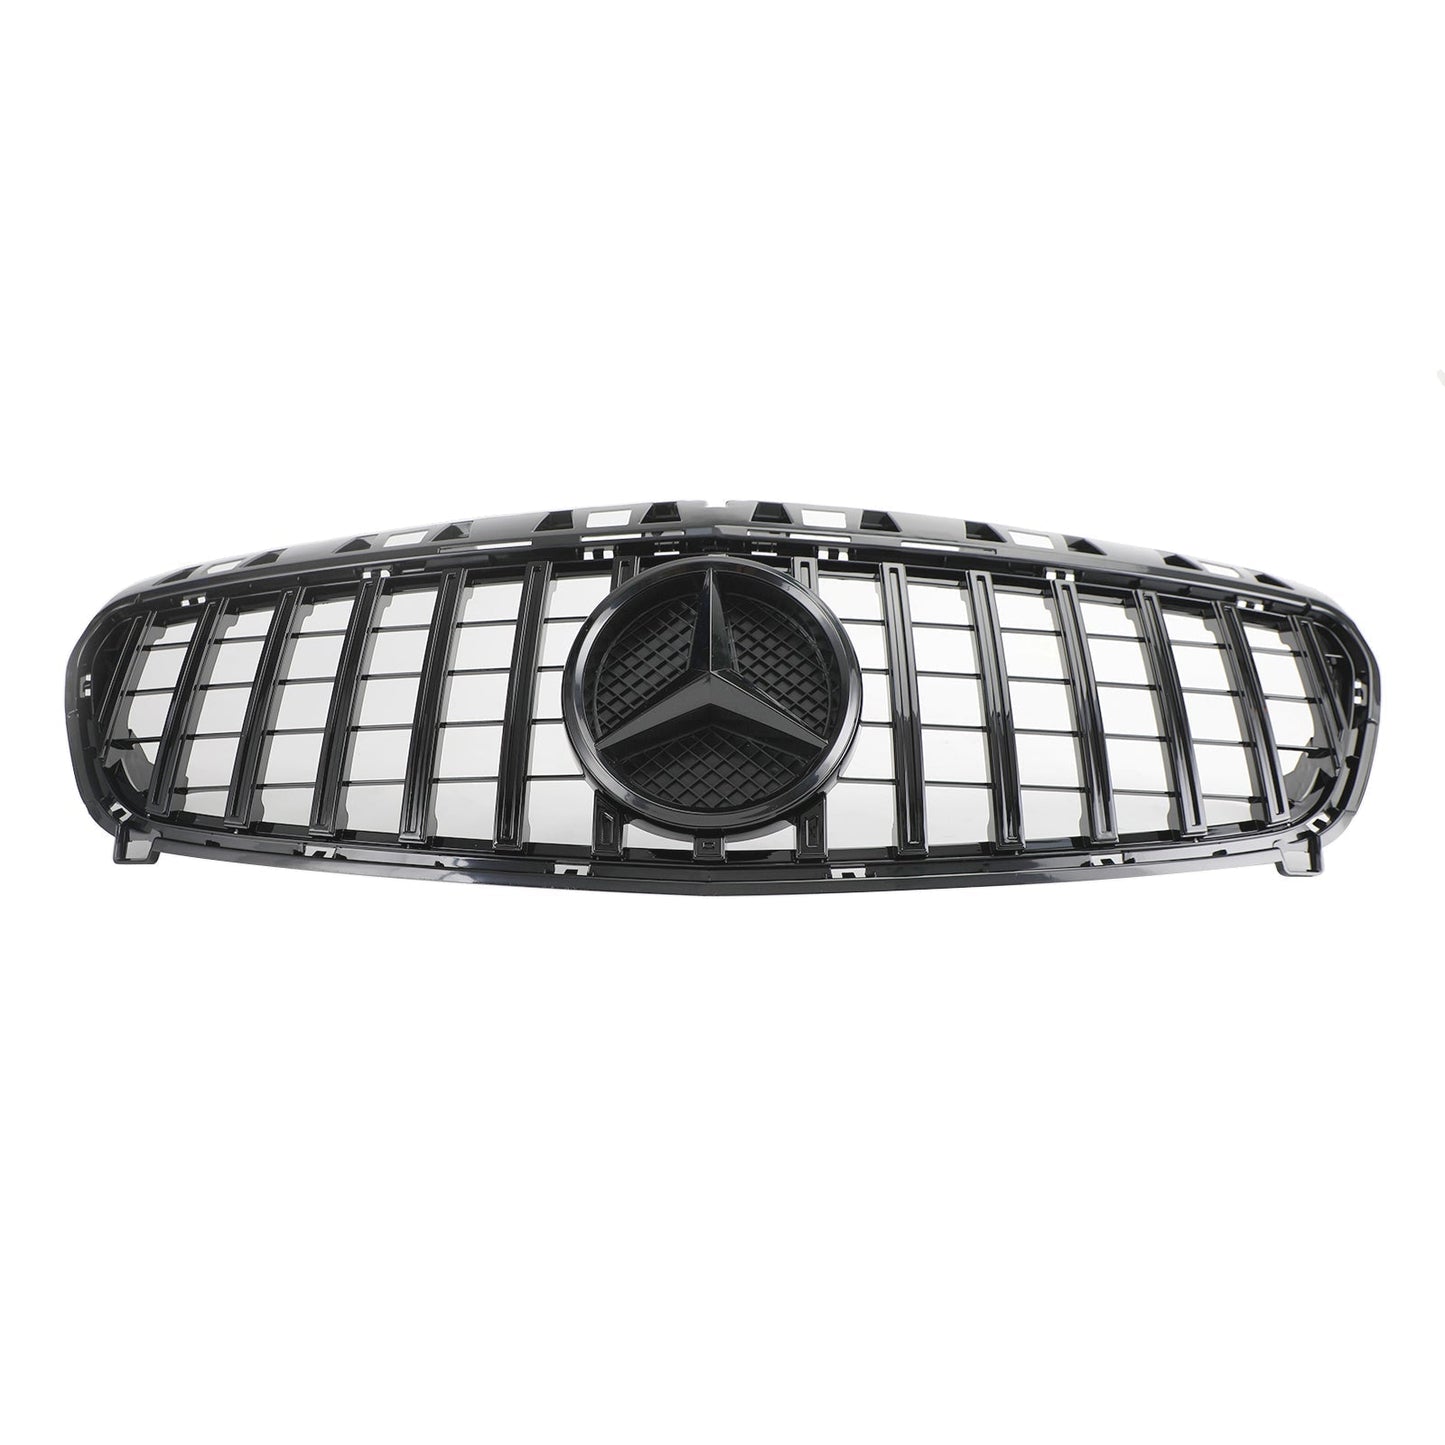 2013-2015 Benz A CLASS W176 A180 A200 A220 A250 Hatchback Mercedes Benz Grill Car grille Gloss Black Front Bumper Grille Grill